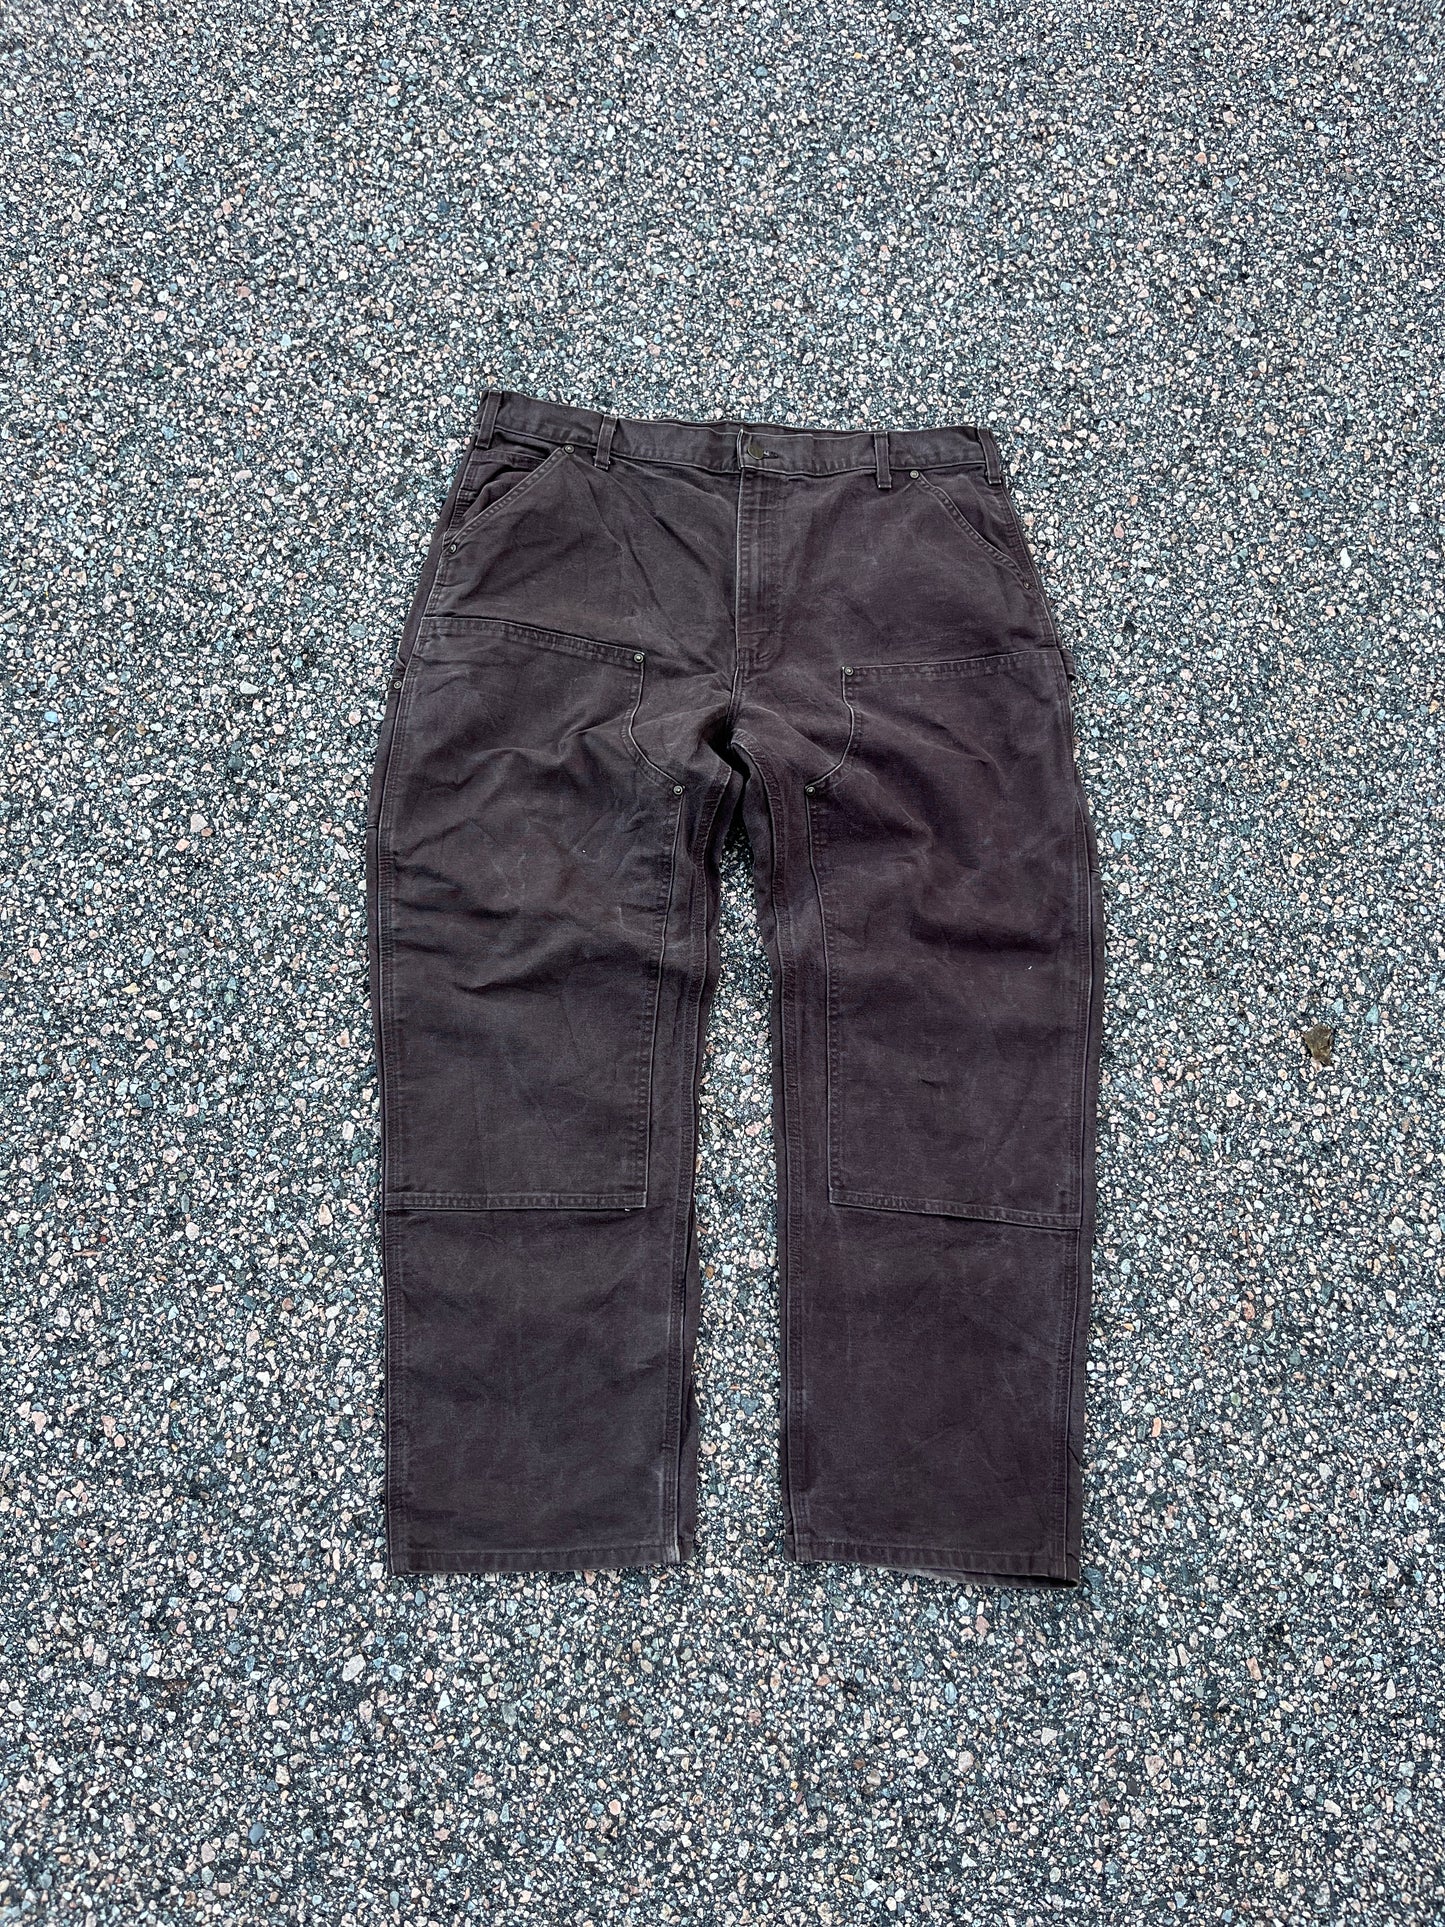 Faded Brown Carhartt Double Knee Pants - 39 x 31